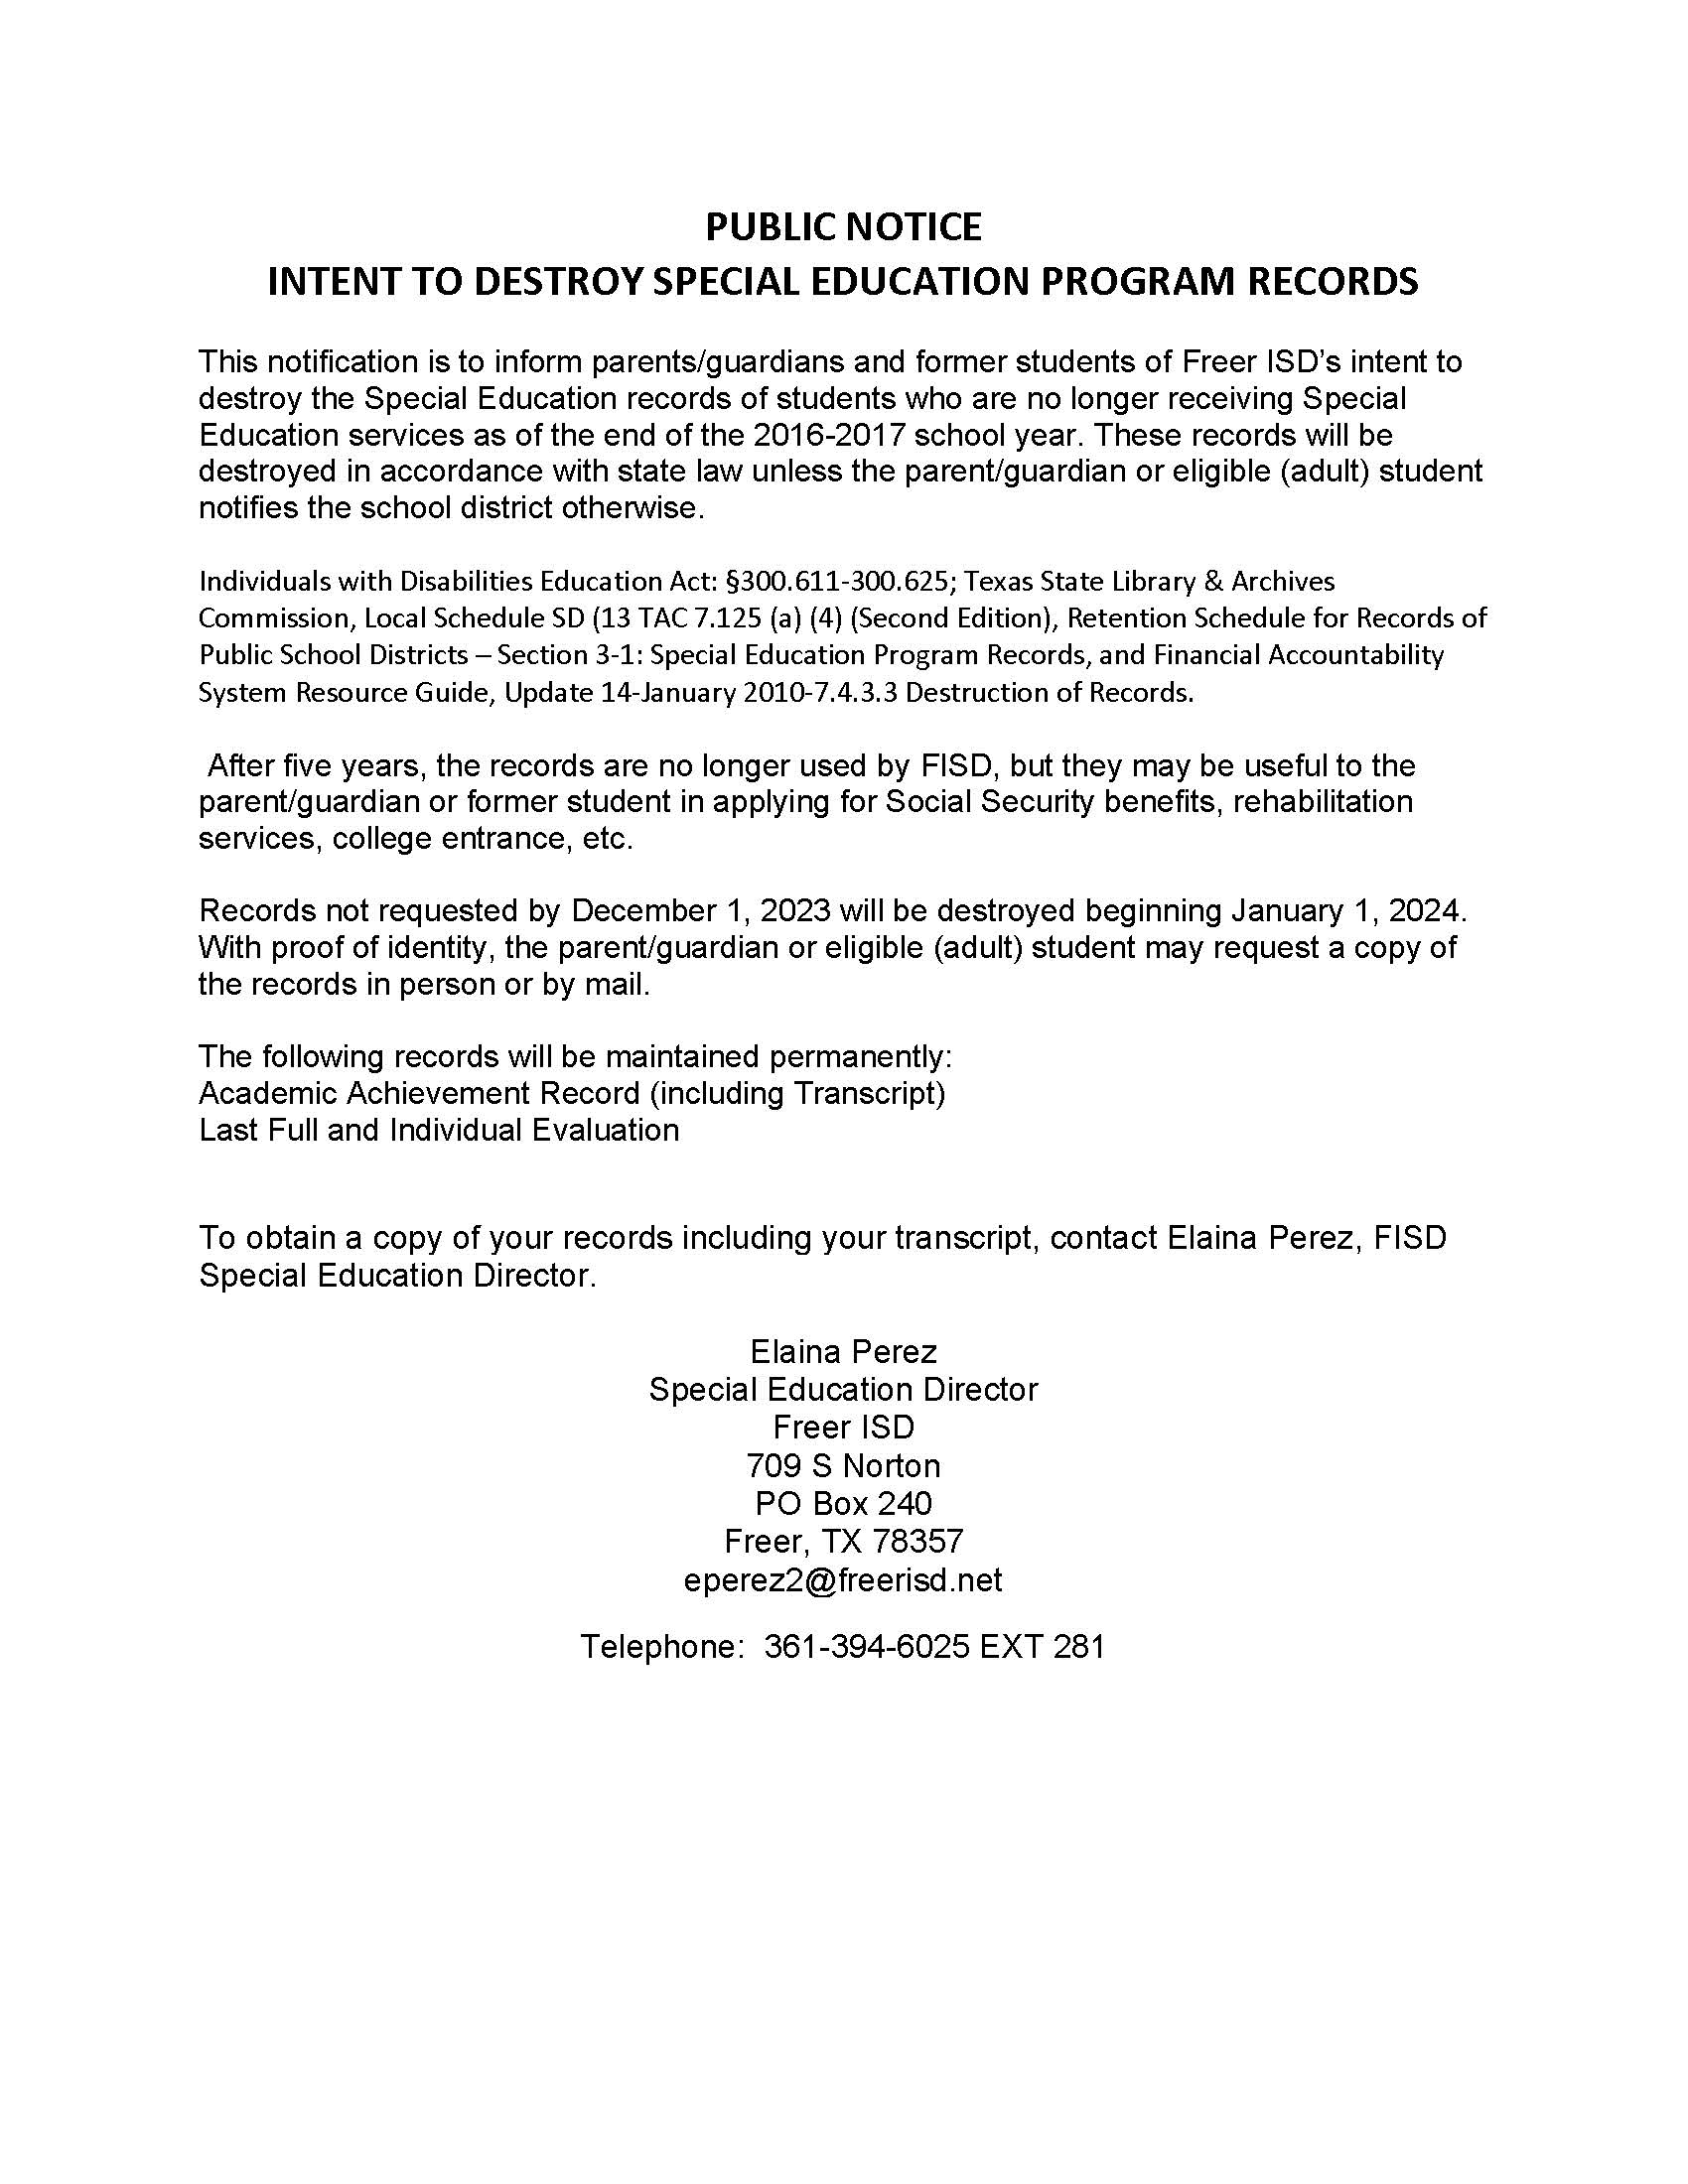 Public Notice - Intent to Destroy Special Education Program Records